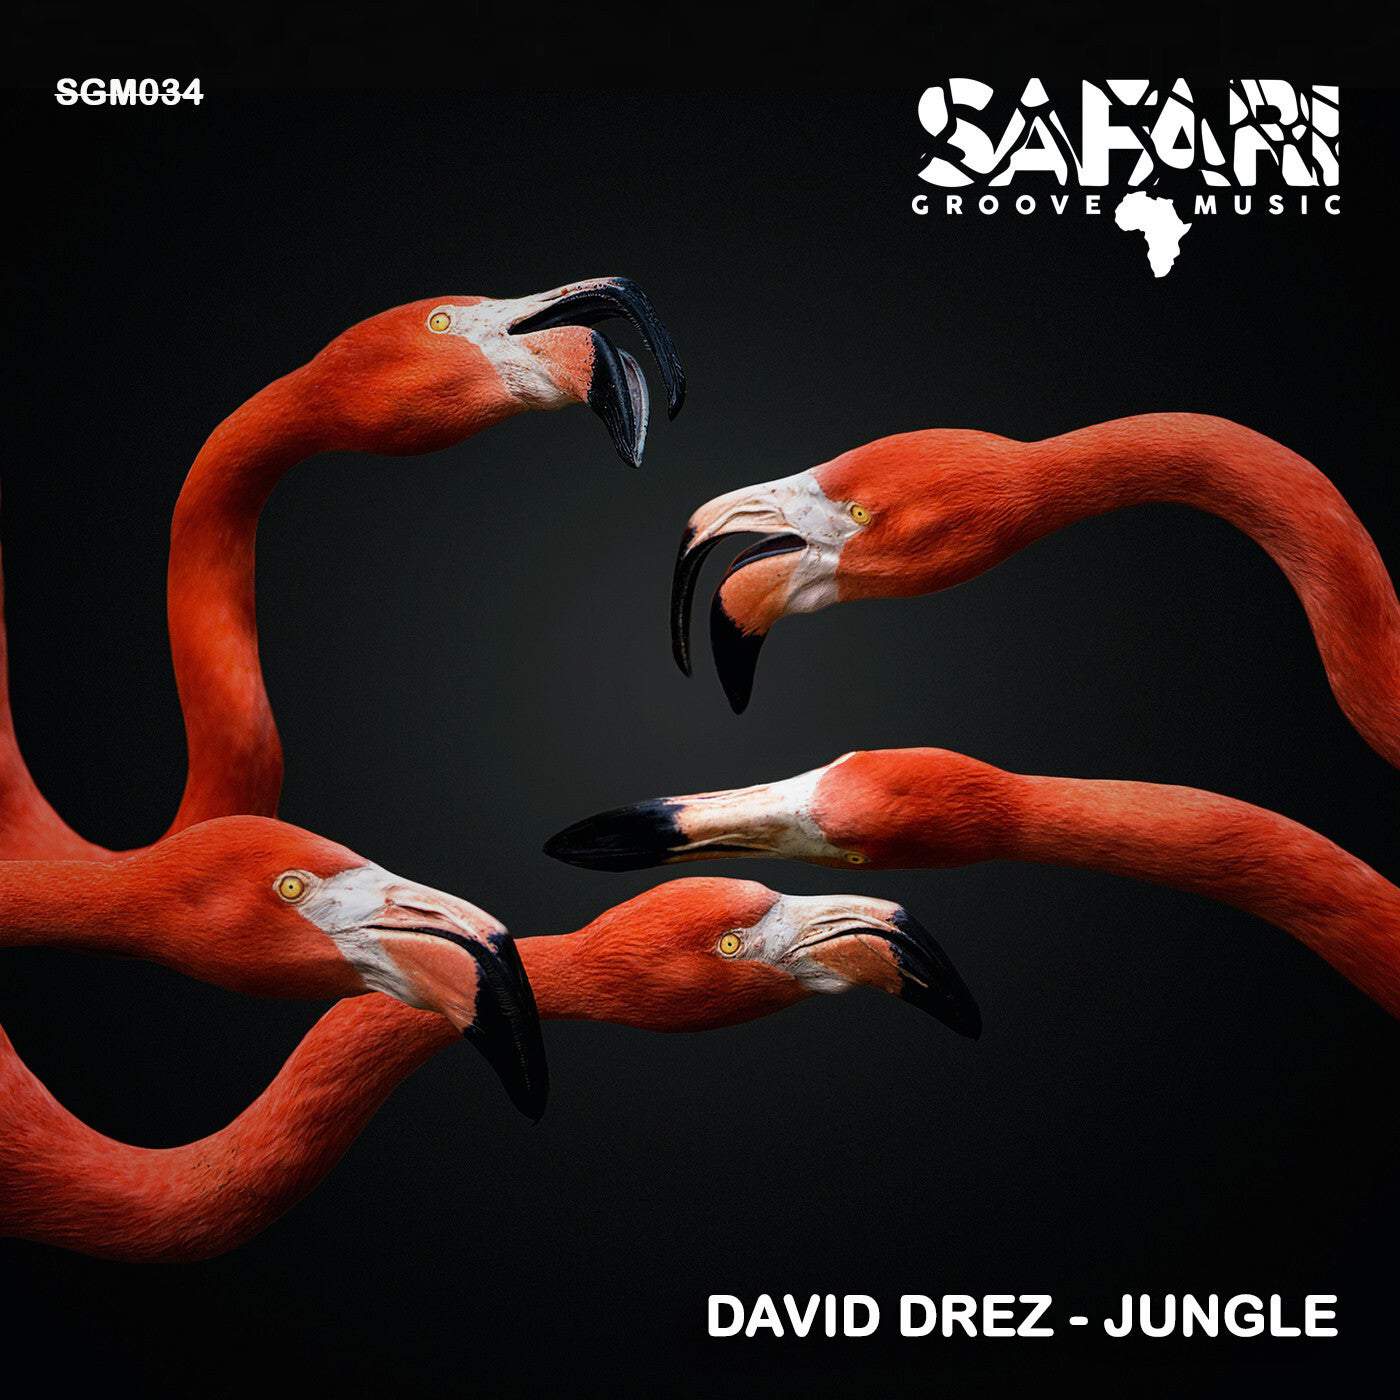 Download David Drez - Jungle on Electrobuzz